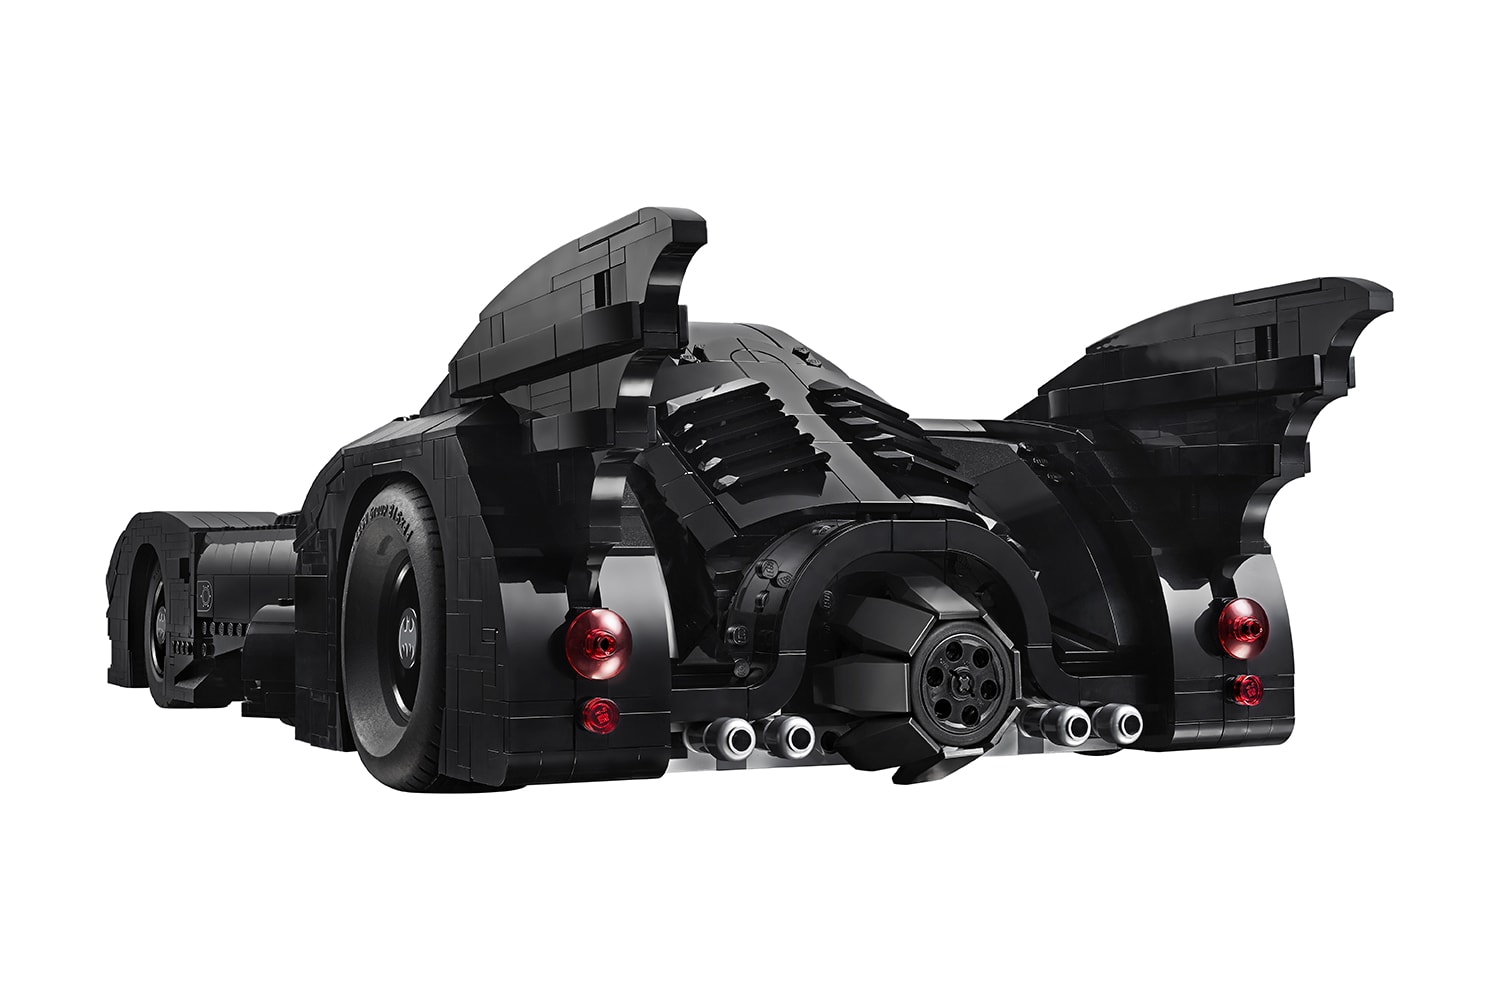 LEGO 1989 'Batman' 30th Anniversary Batmobile Release